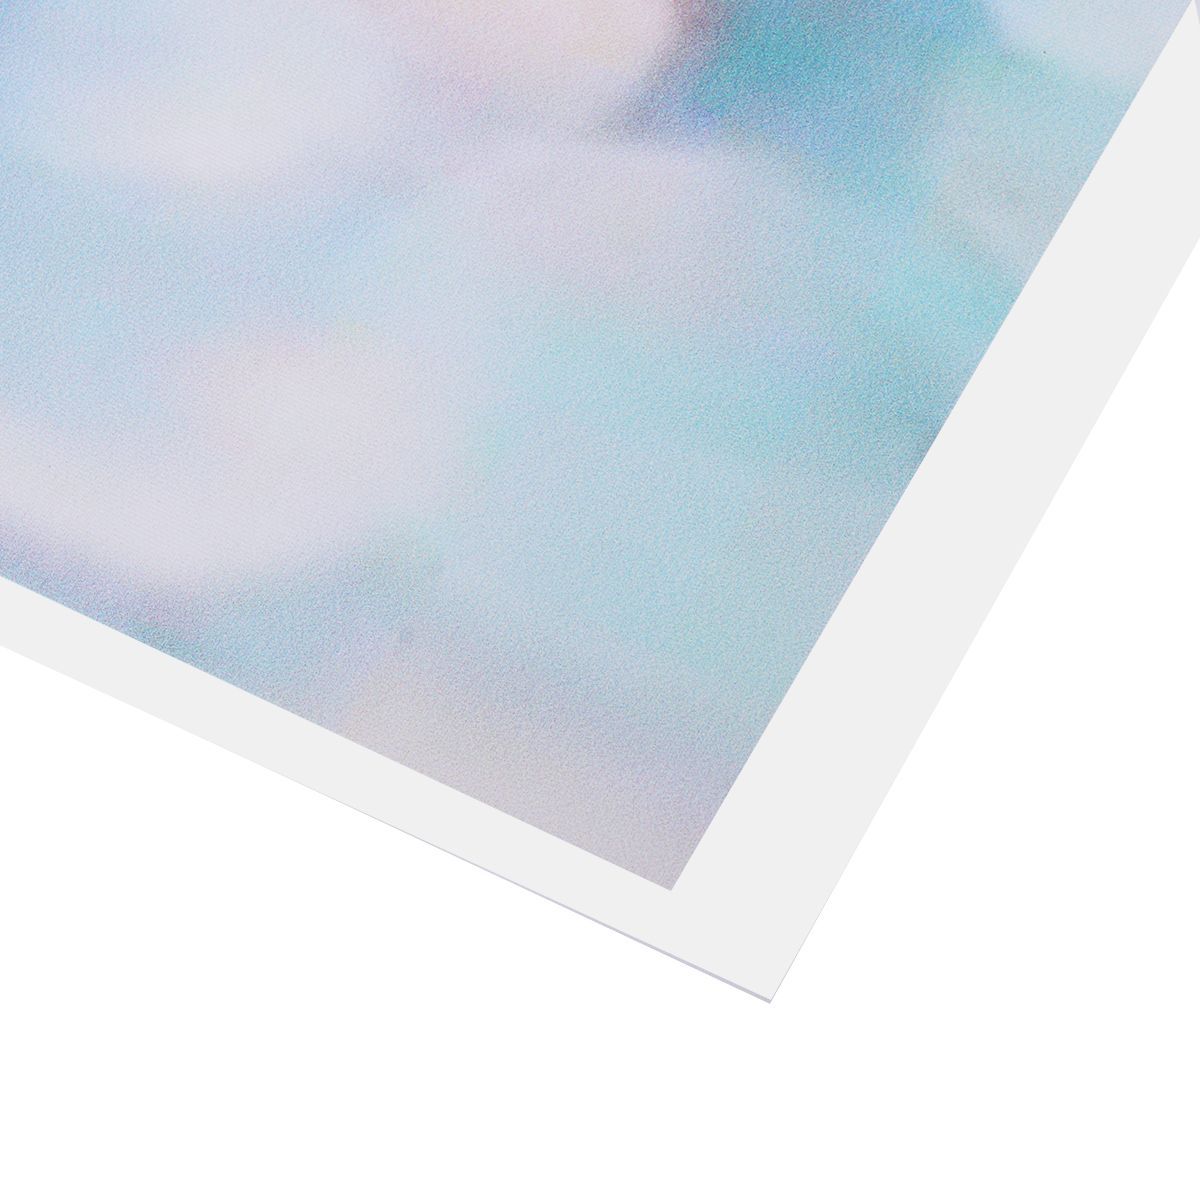 Blue-Pink-Glitter-Bokeh-Thin-Vinyl-Photography-Backdrop-Background-Studio-Photo-Prop-1748925